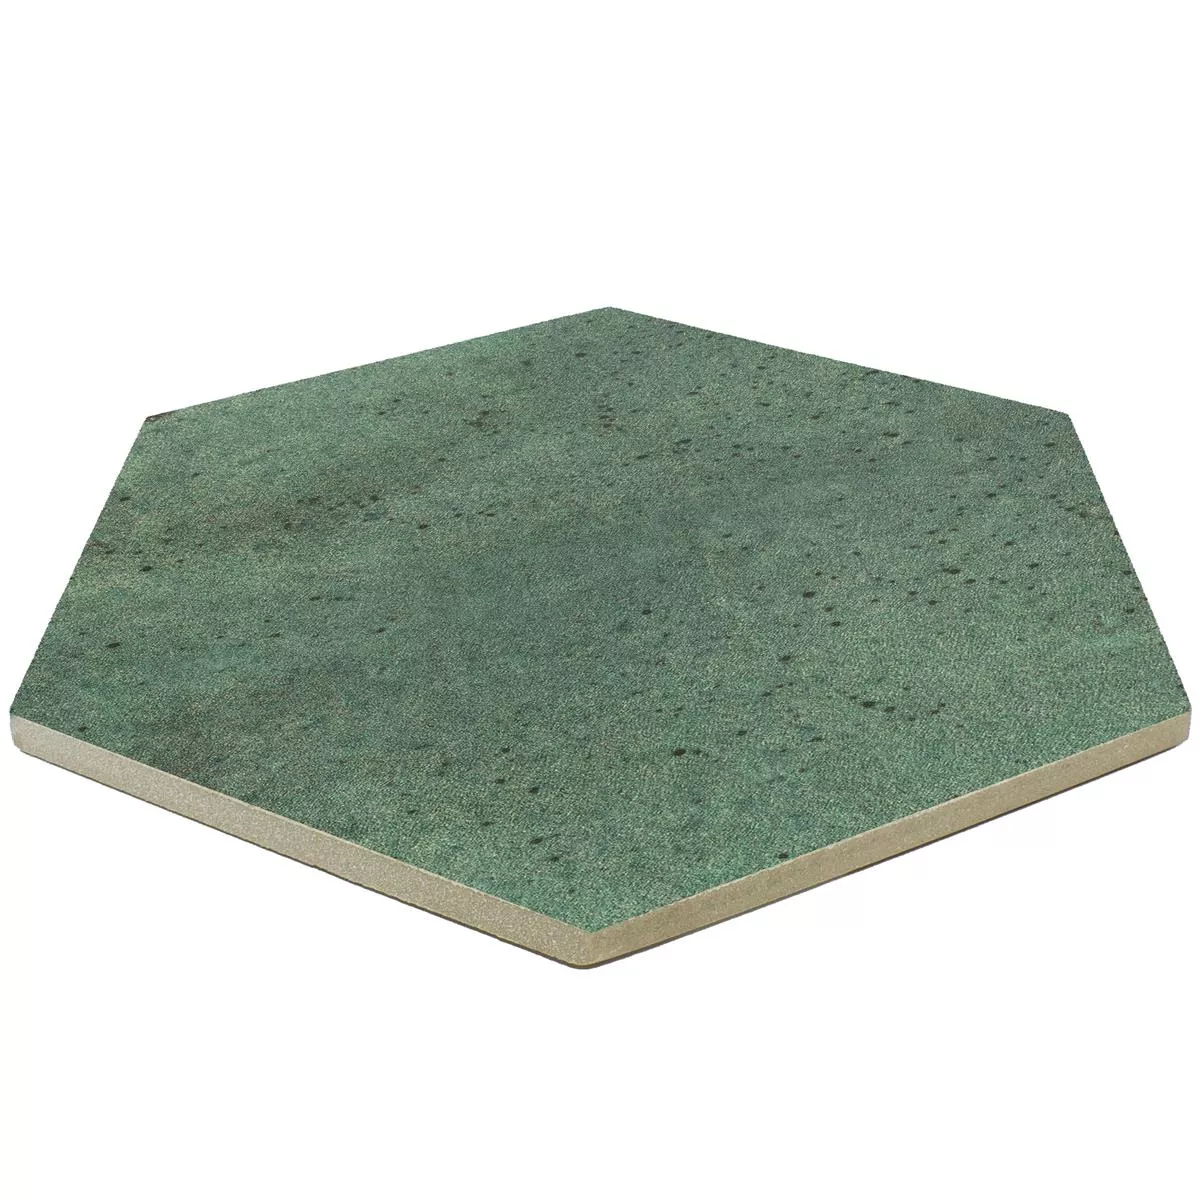 Vzorek Podlahové Dlaždice Arosa Matný Šestiúhelník Smaragdová Zeleň 17,3x15cm